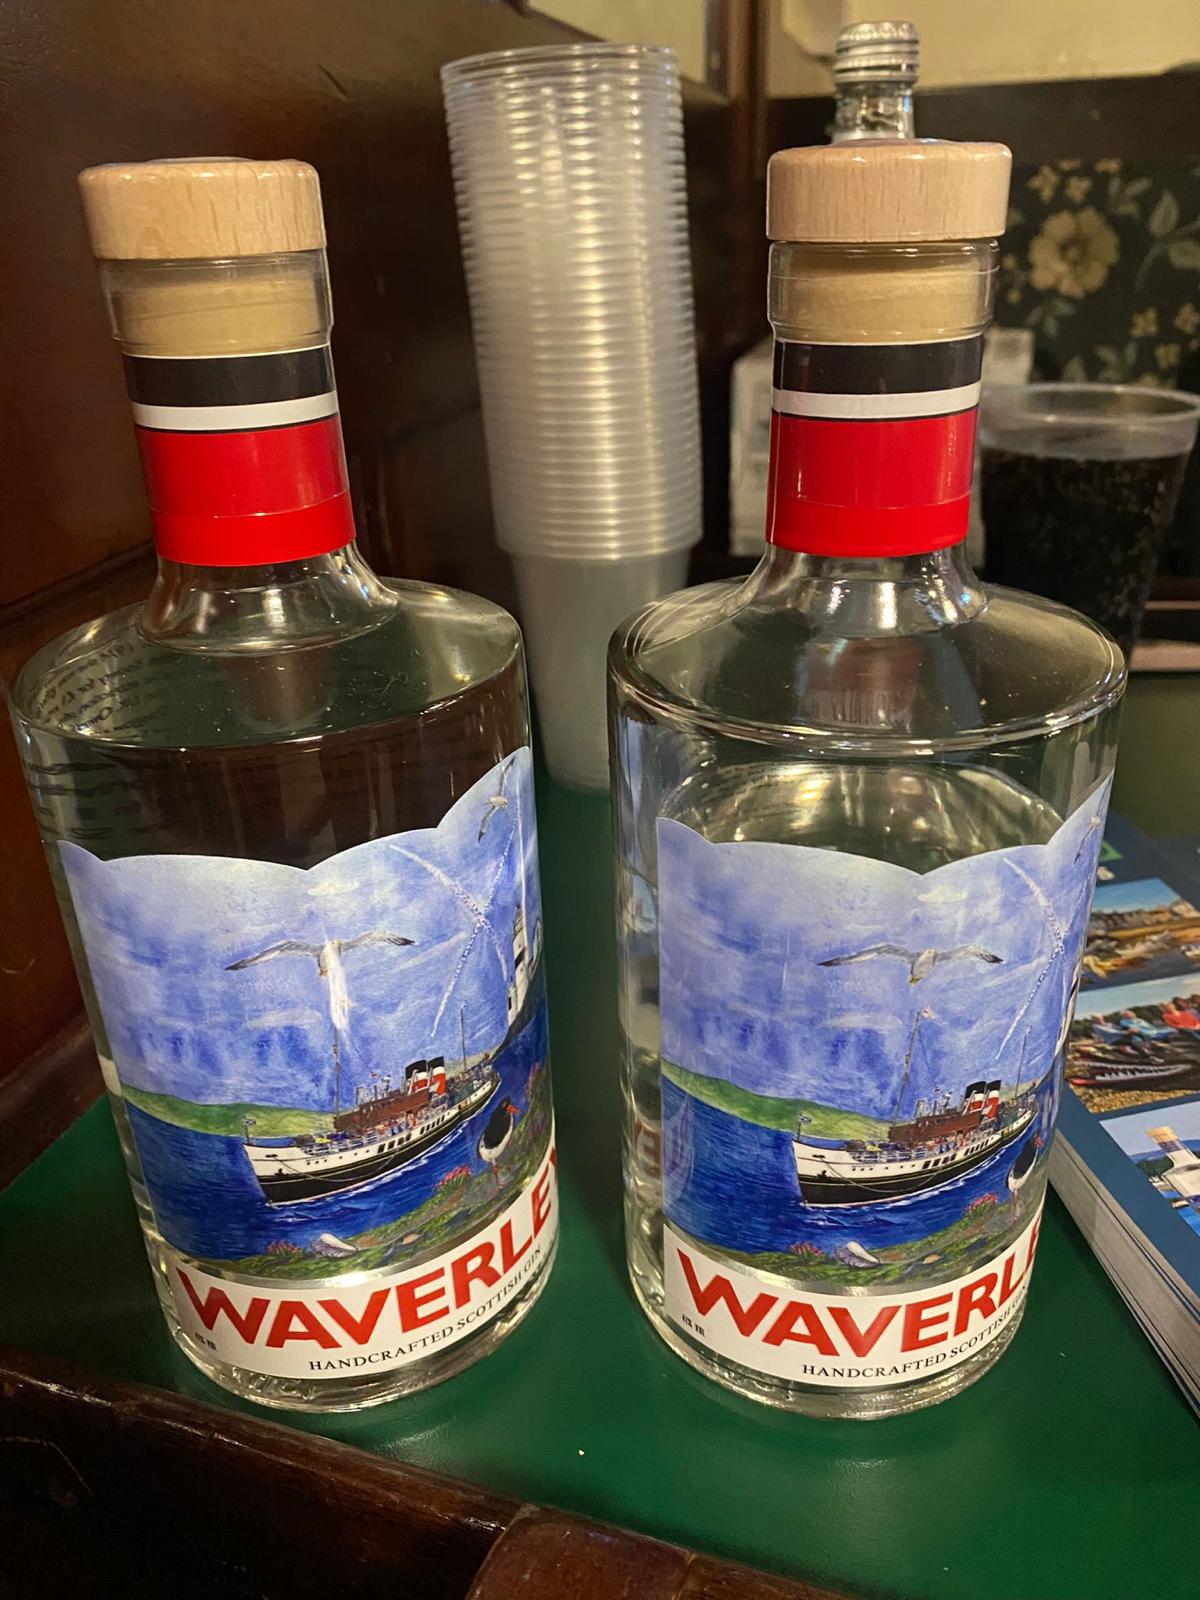 waverley gin isle of cumbrae distillery